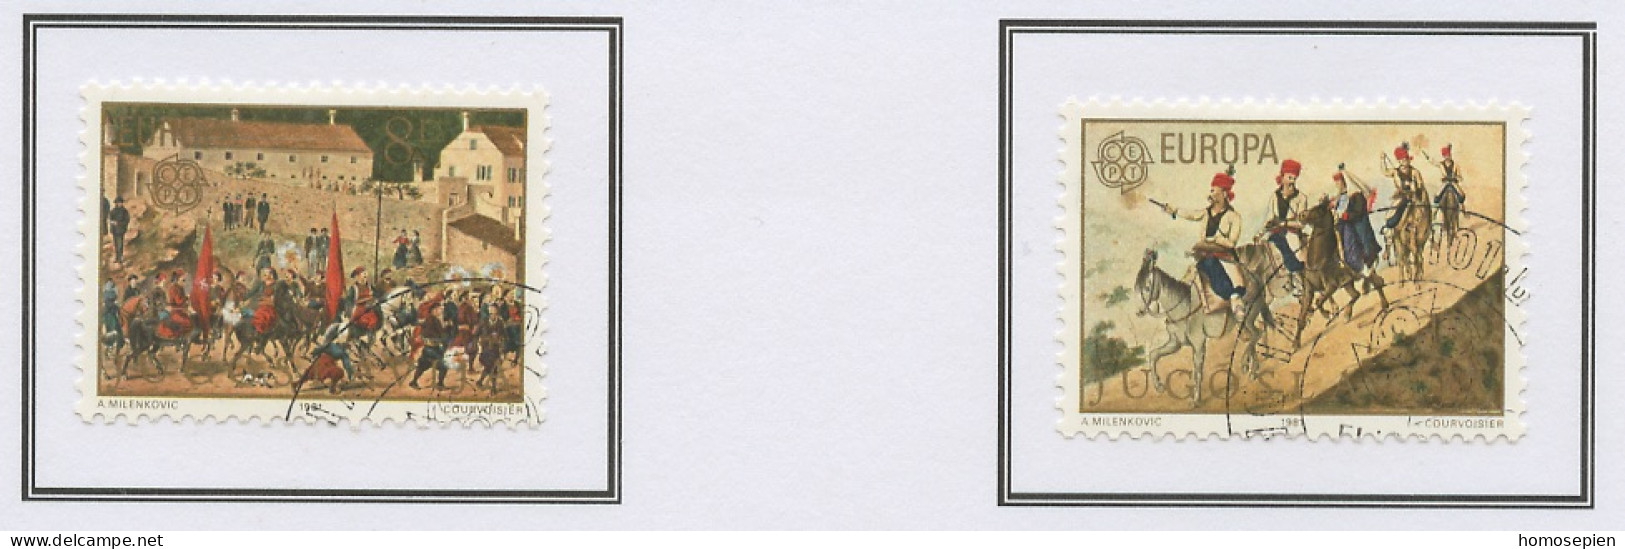 Yougoslavie - Jugoslawien - Yugoslavia 1981 Y&T N°1769 à 1770 - Michel N°1883 à 1884 (o) - EUROPA - Used Stamps